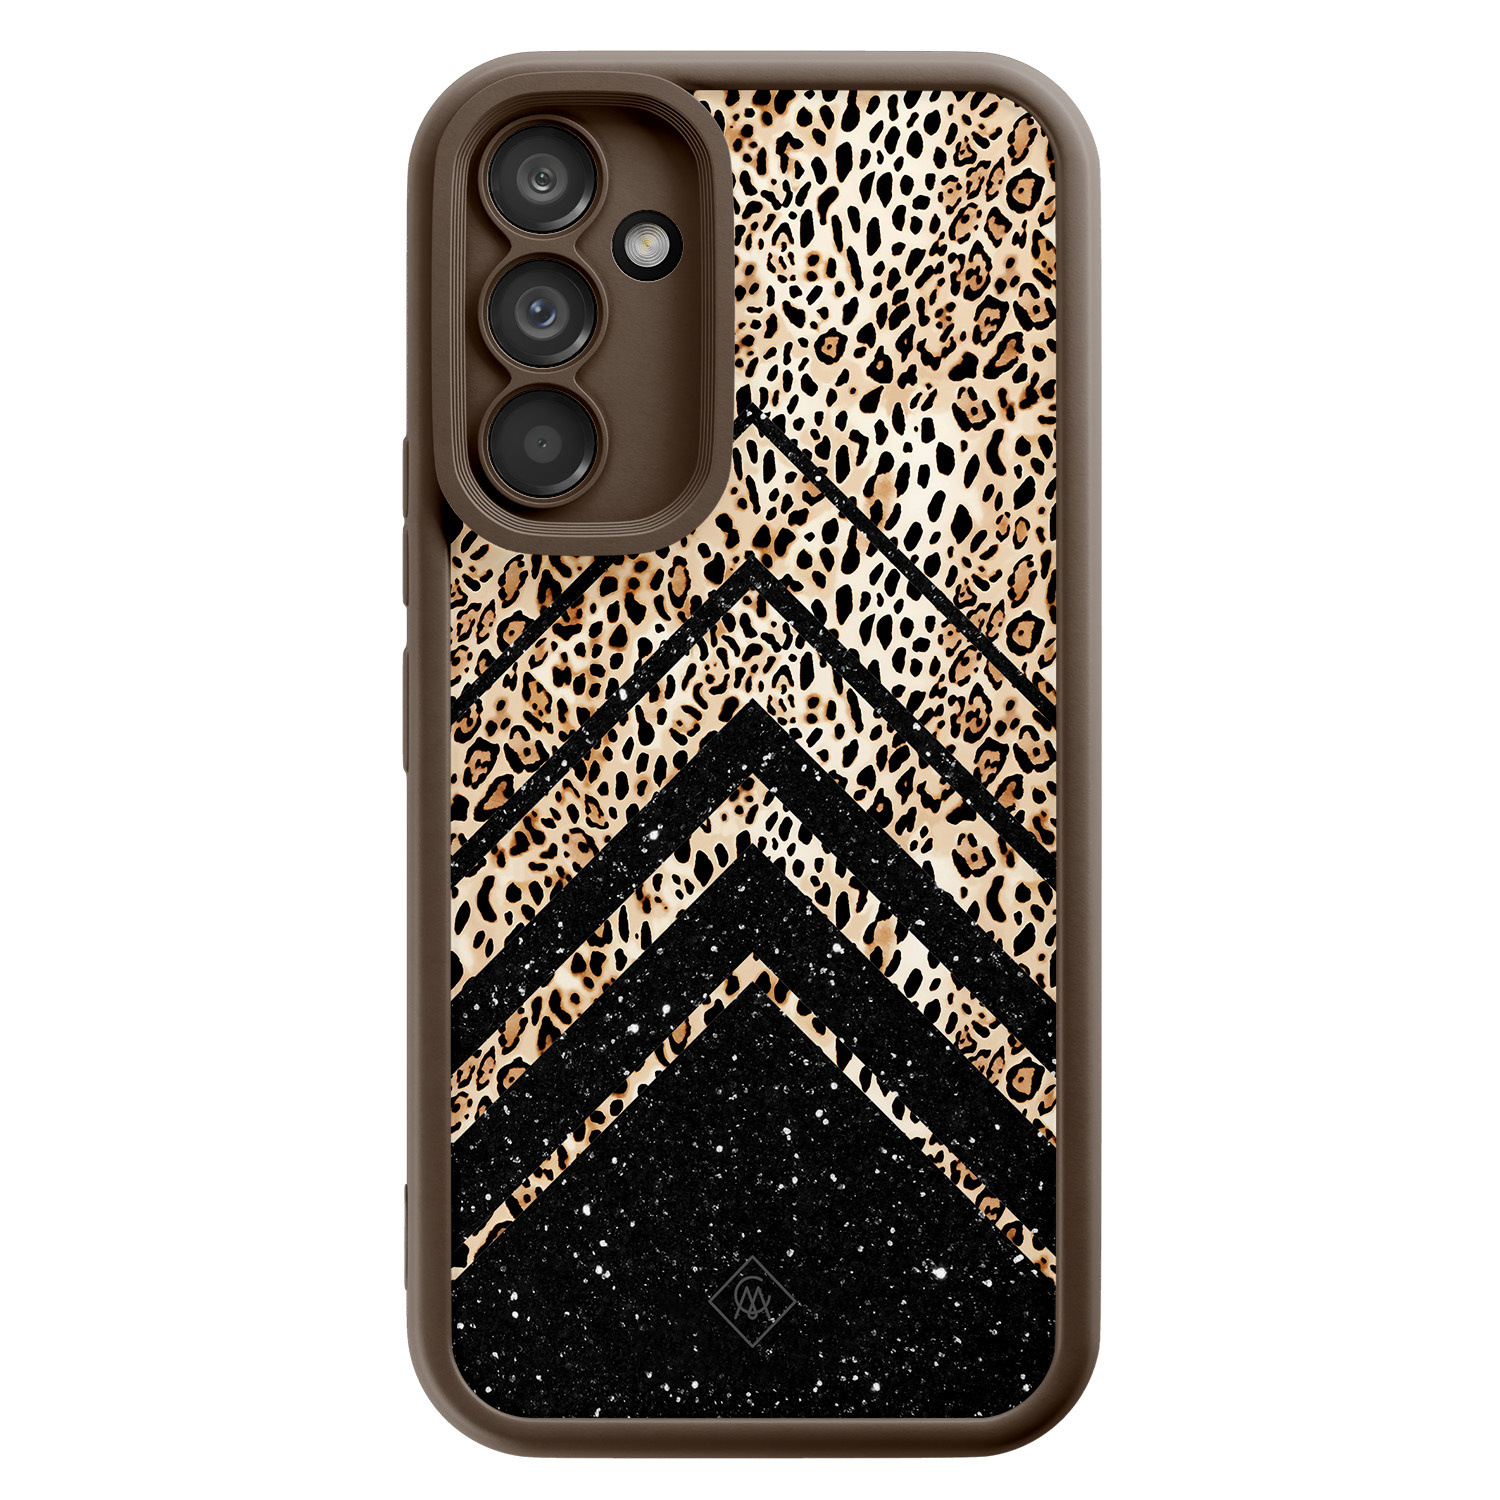 Samsung Galaxy A34 bruine case - Luipaard chevron - Bruin/beige - Hard Case TPU Zwart - Luipaardprint - Casimoda